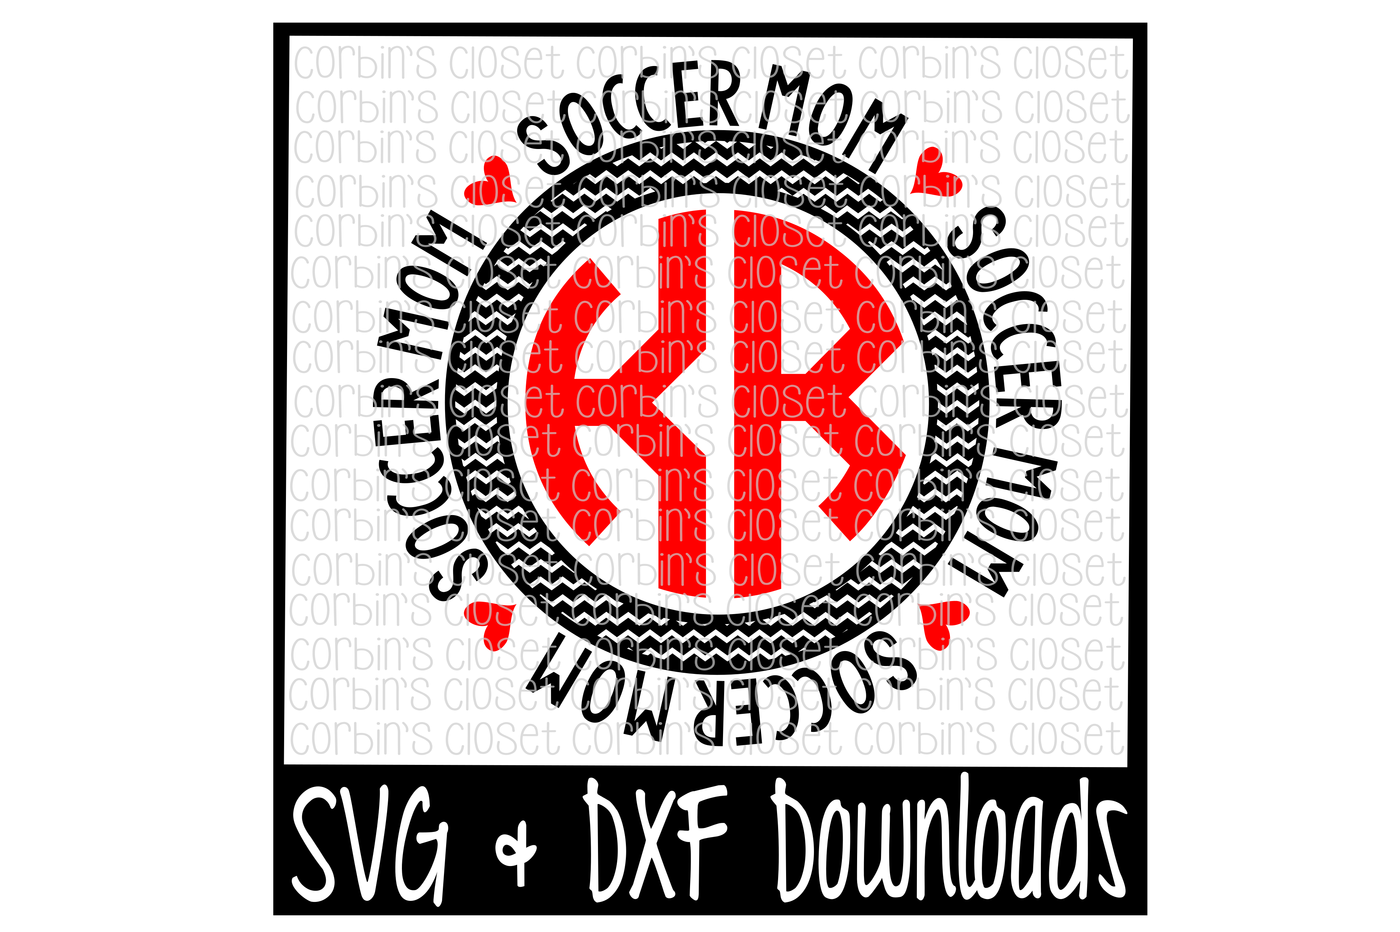 Cheer Mom Svg Png - 193+ File for DIY T-shirt, Mug, Decoration and more